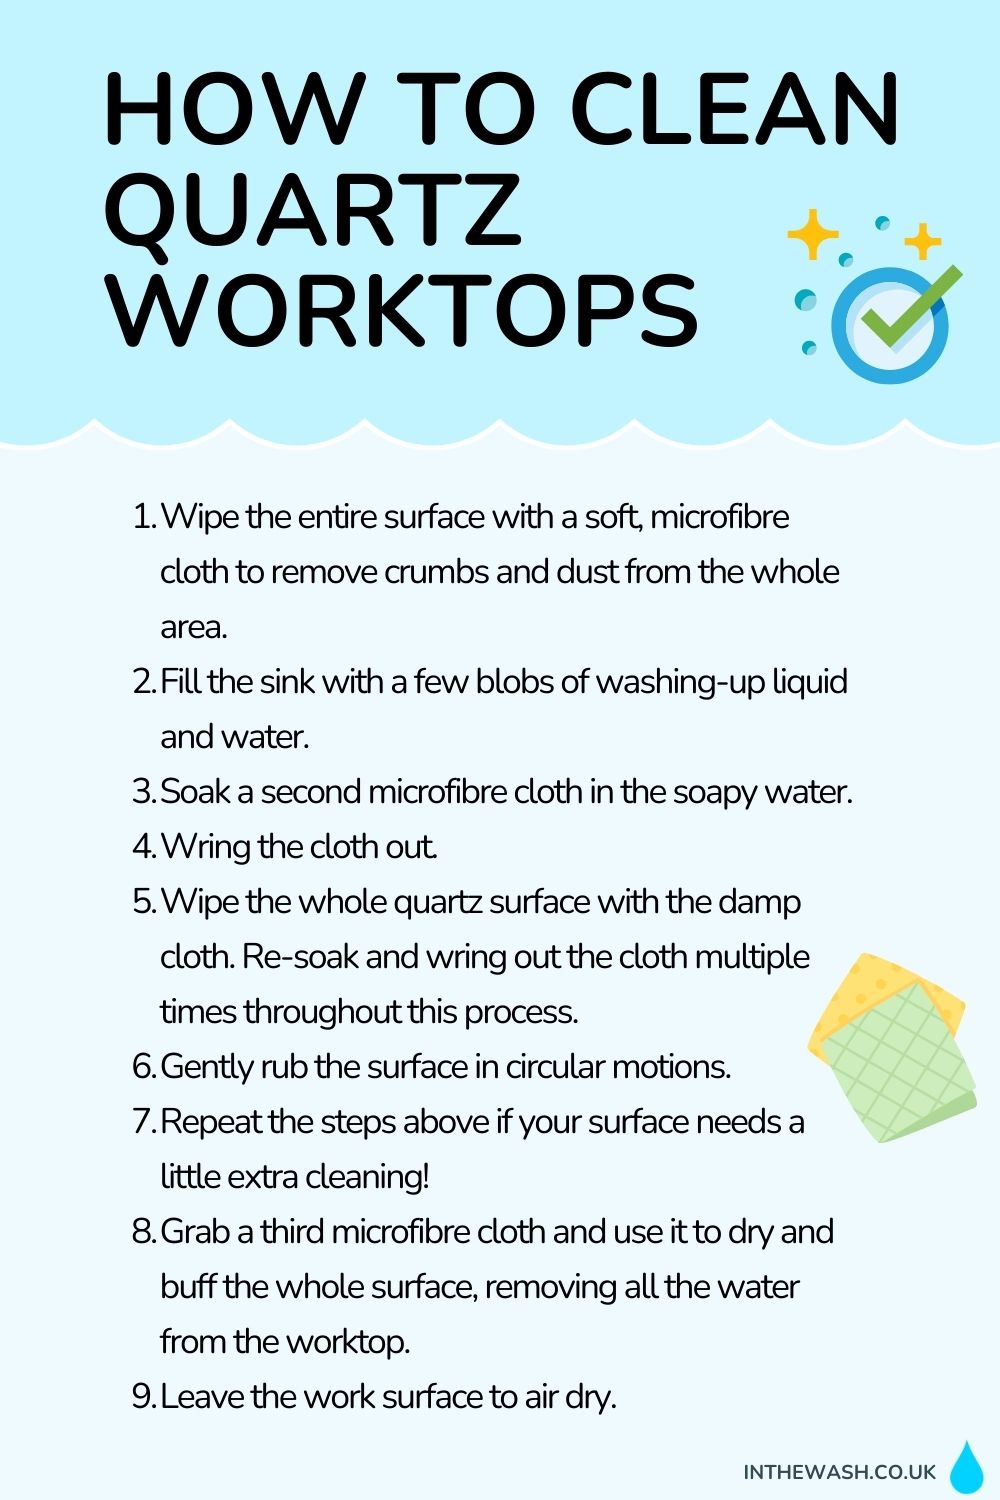 How to Clean Quartz Worktops